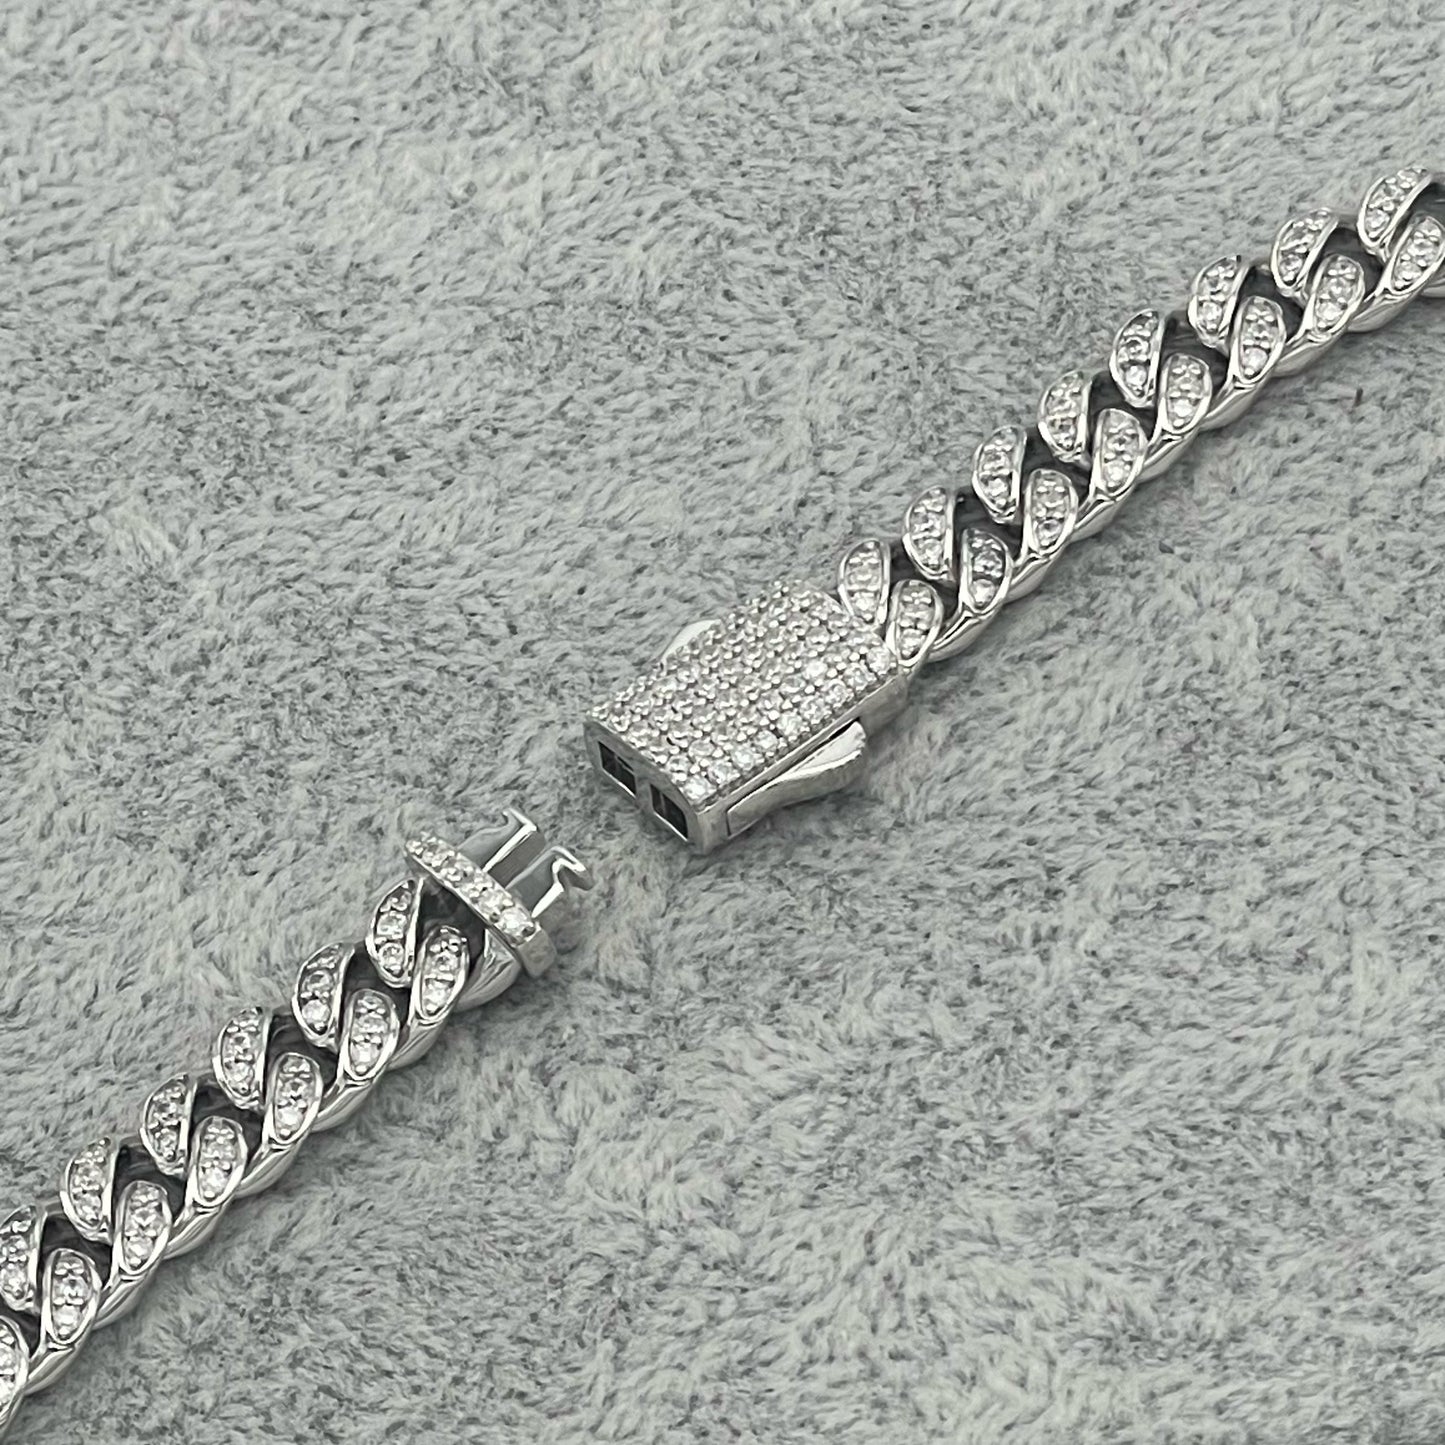 STNB-11 925 Silver Monaco Lock Chain and Bracelet 8mm